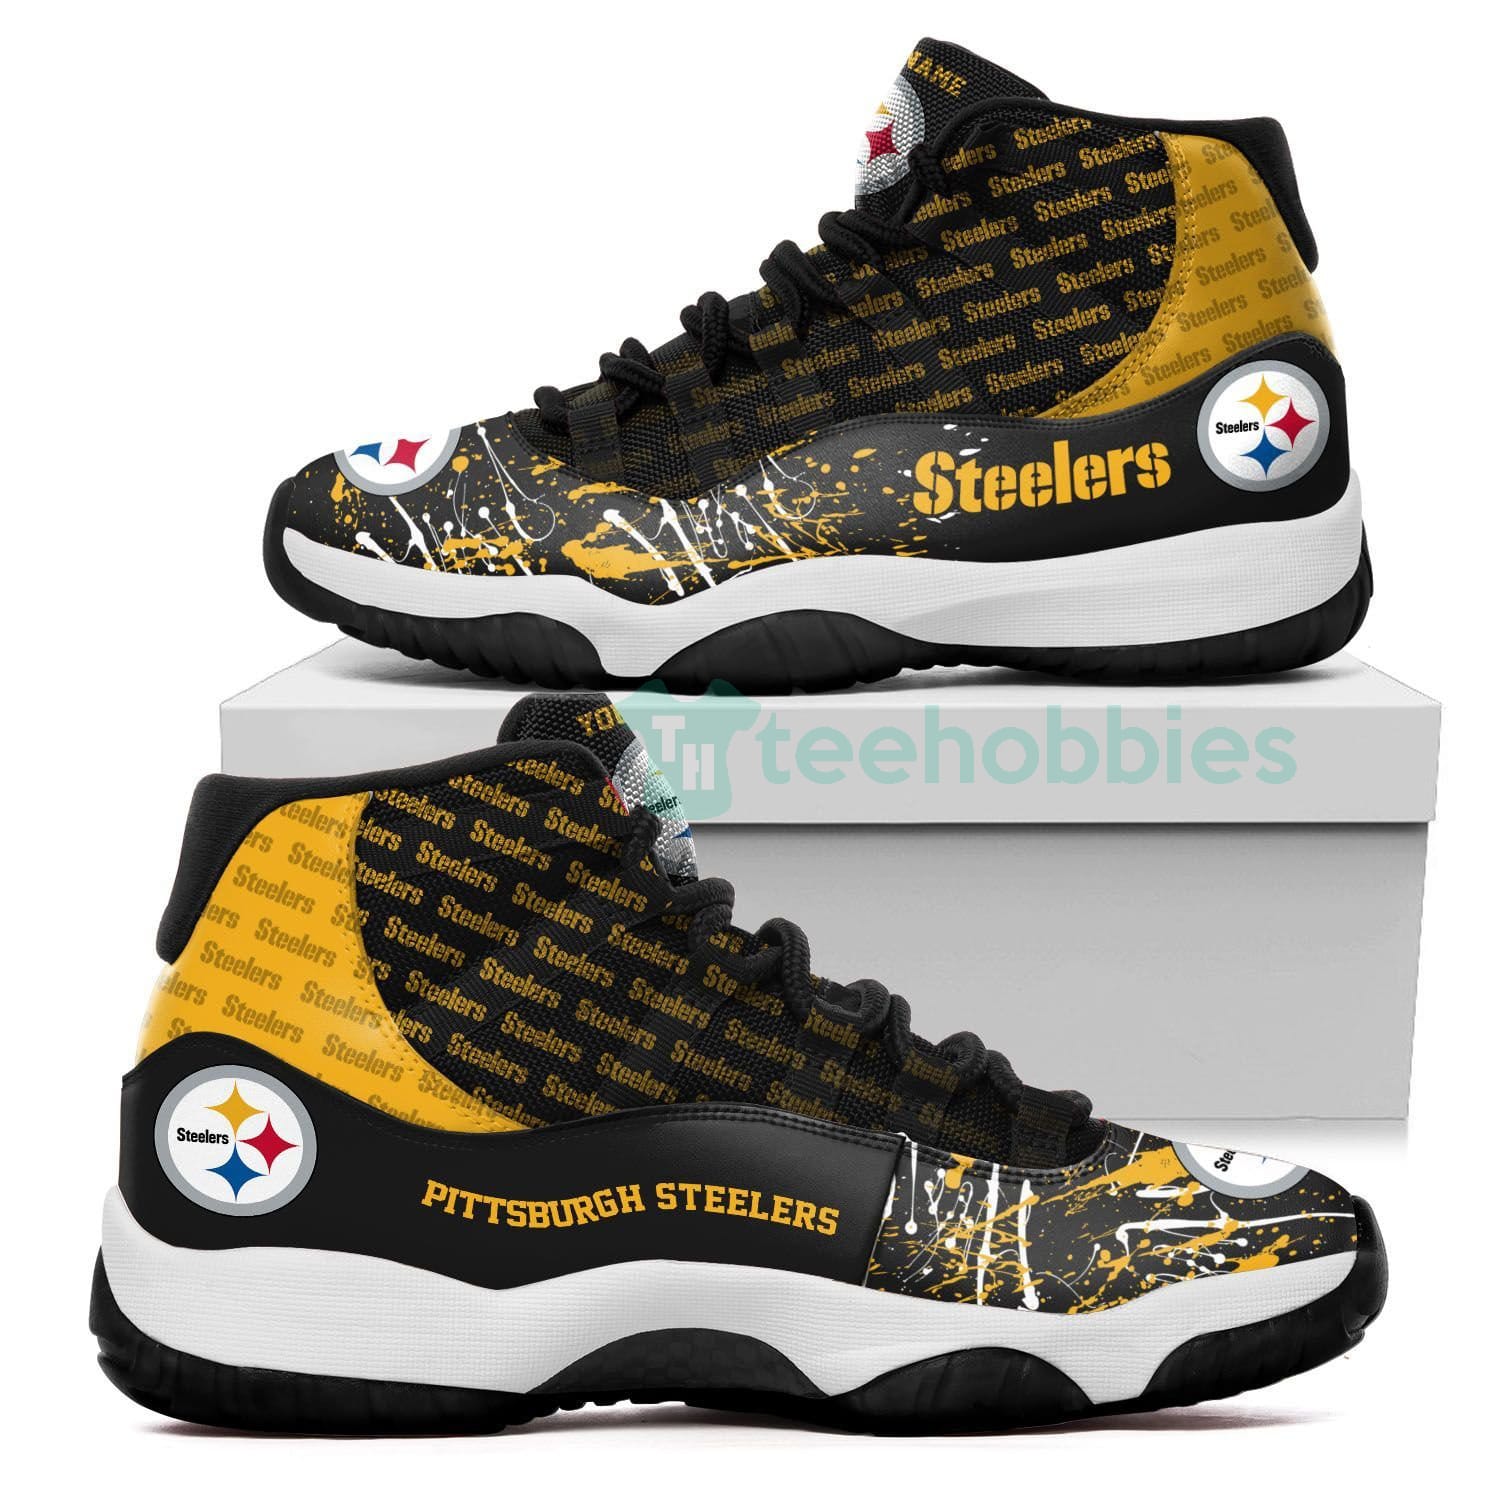 Pittsburgh Steelers Customized New Air Jordan 11 Shoes